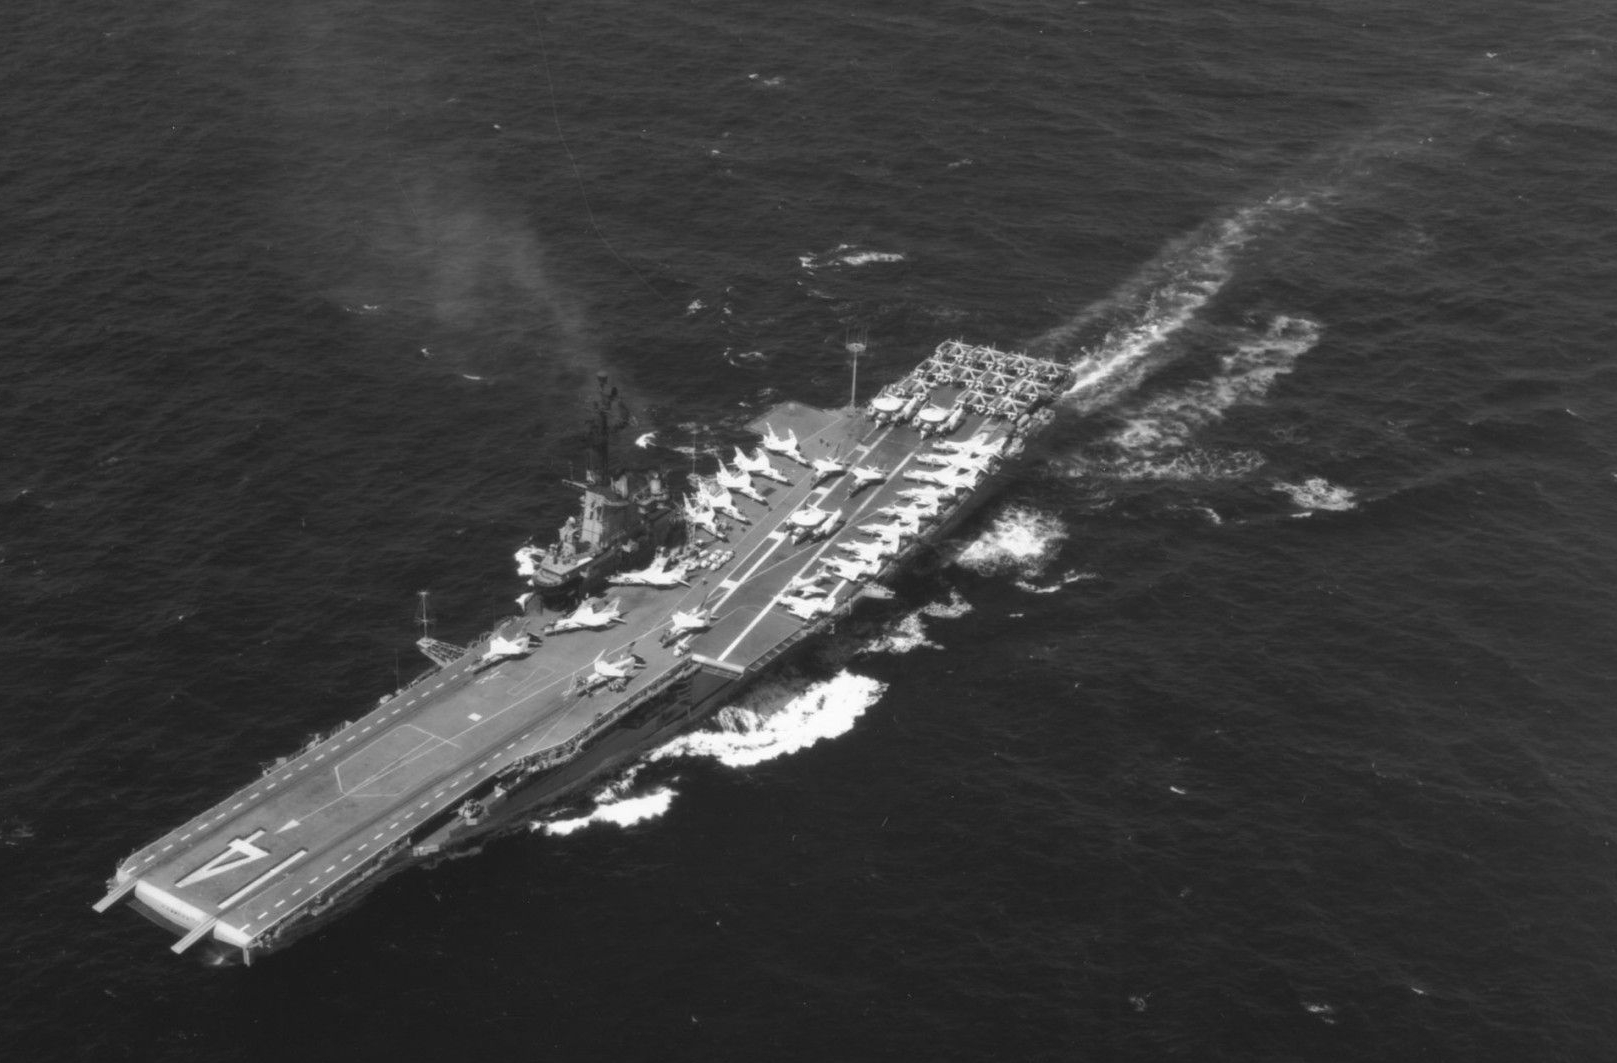 USS Ticonderoga